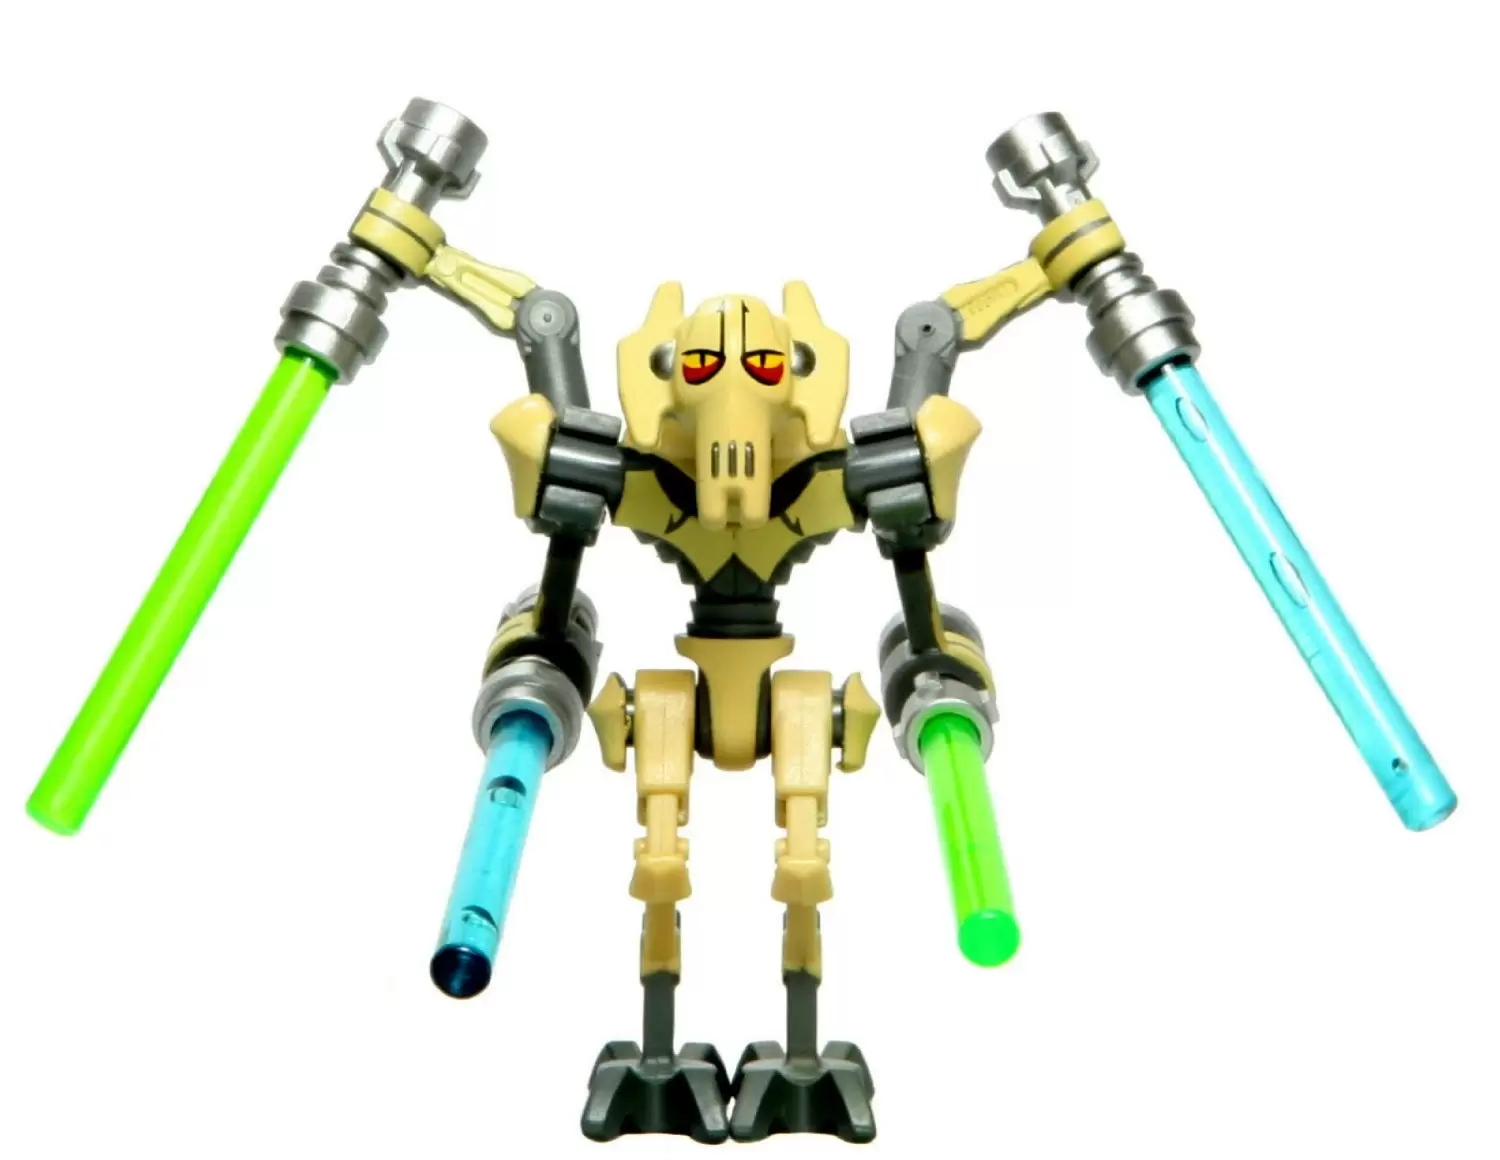 LEGO Star Wars Minifigs - General Grievous